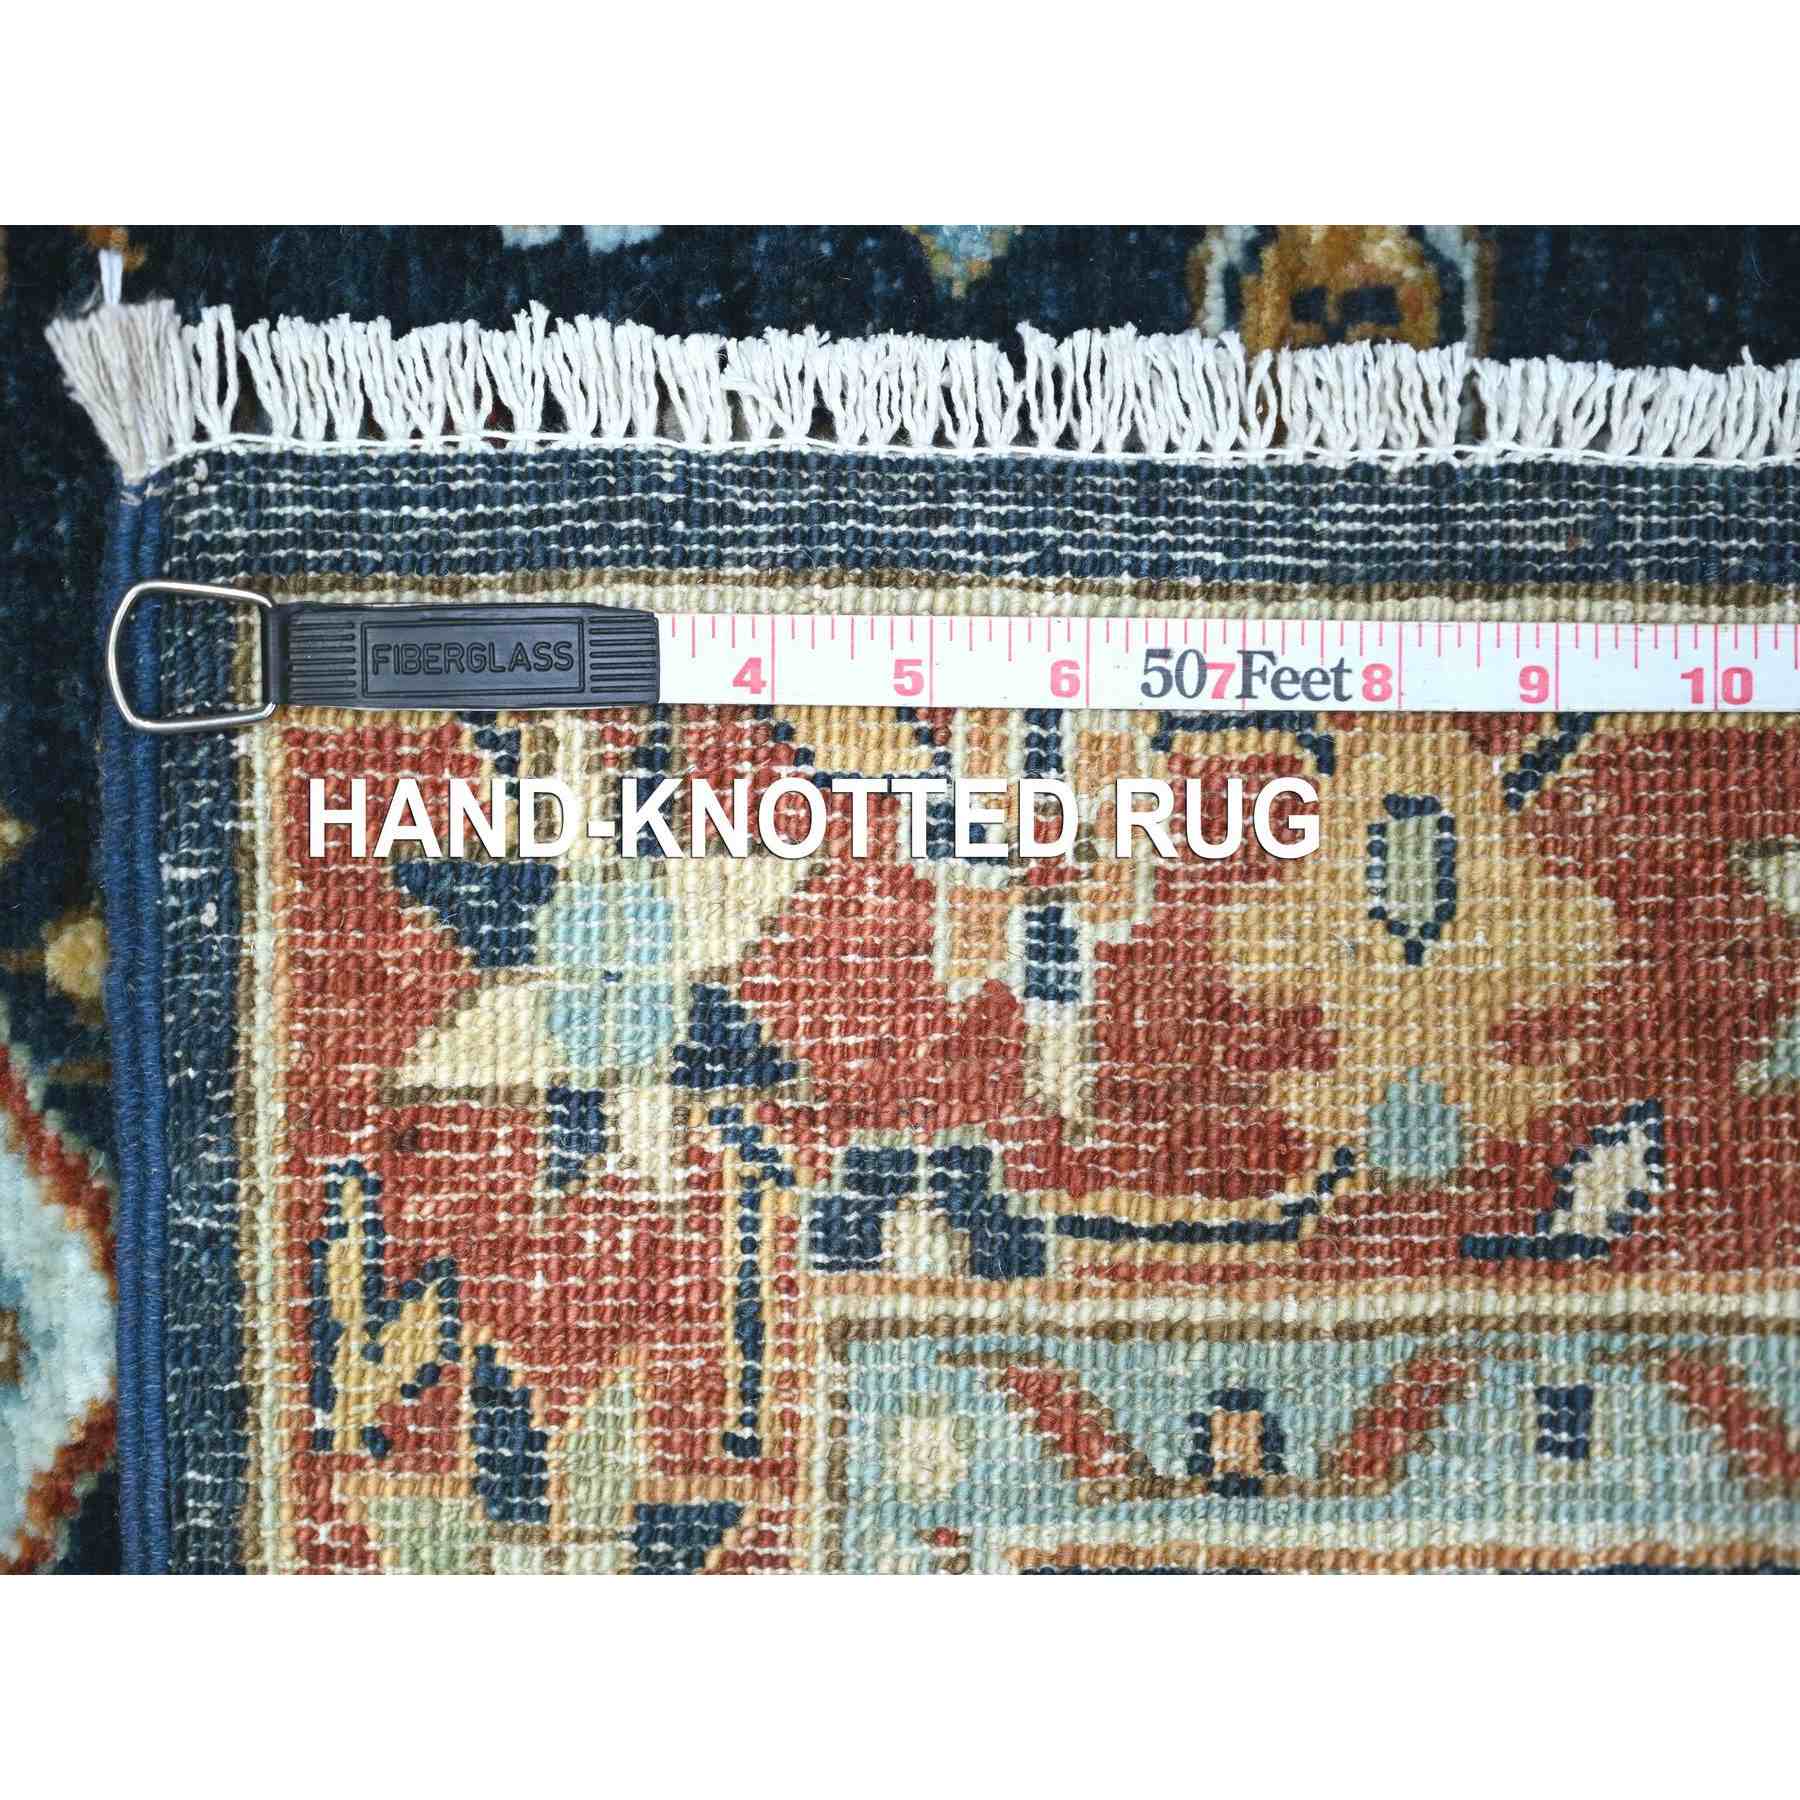 Mamluk-Hand-Knotted-Rug-443125